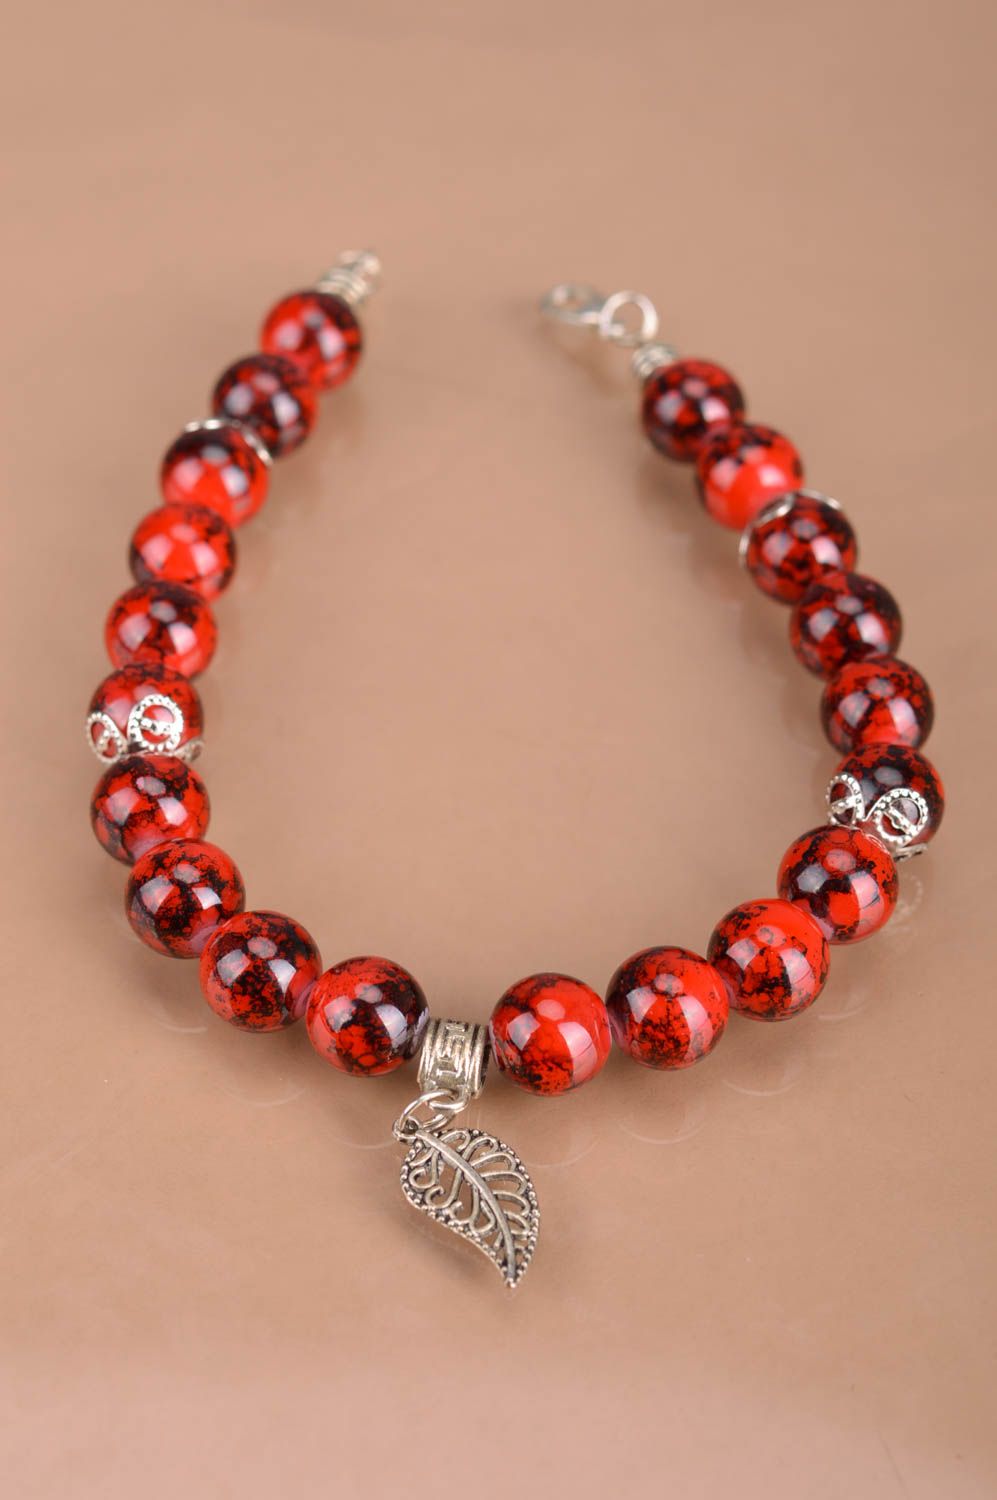 Handmade designer glass beaded bracelet with charm women's accessories red  photo 2